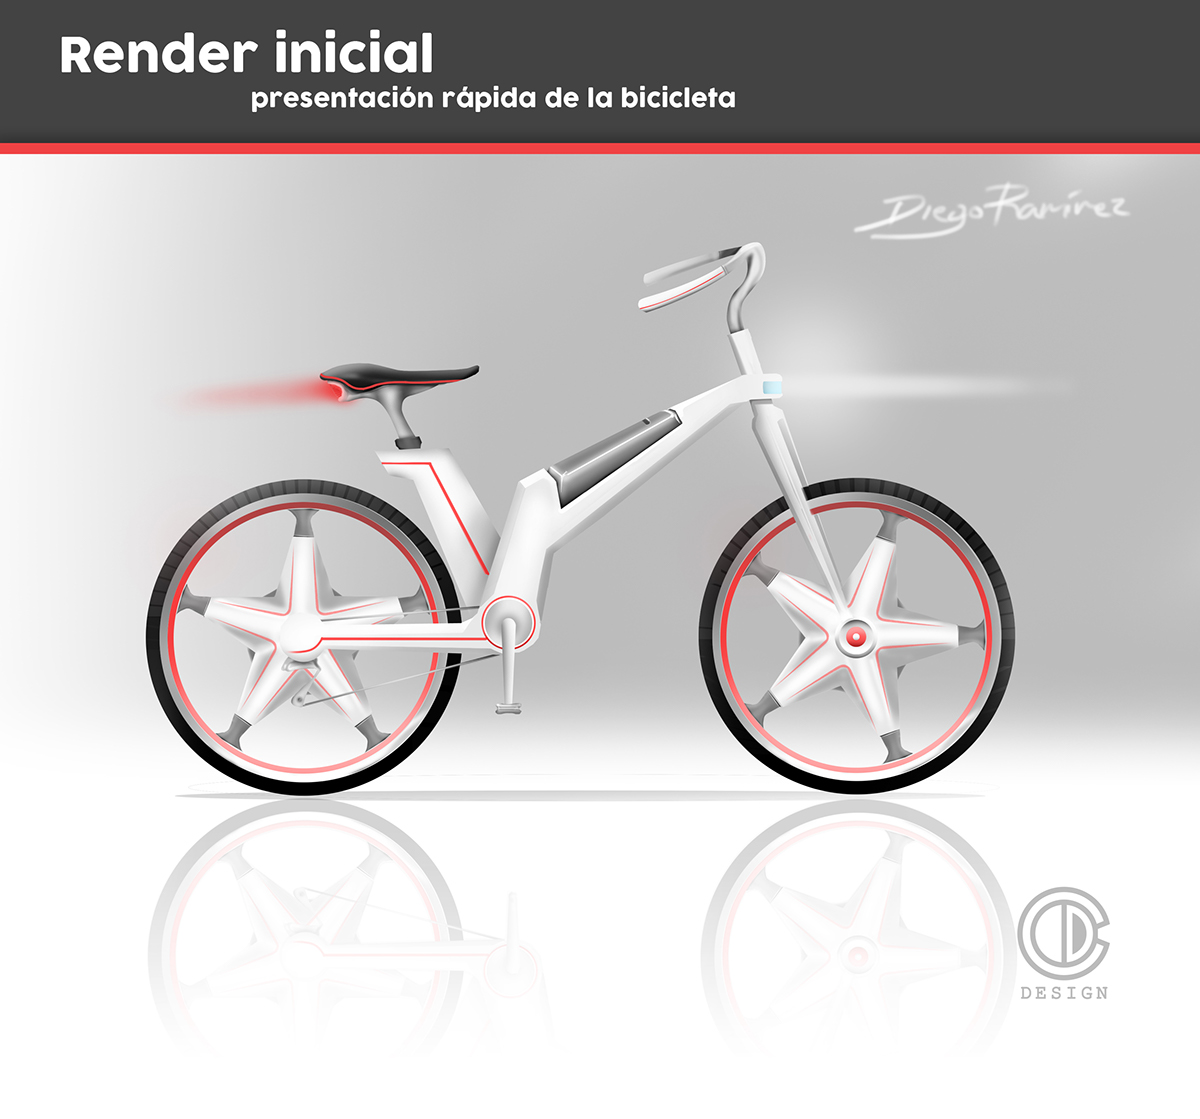 Bike Urban bicycle design process